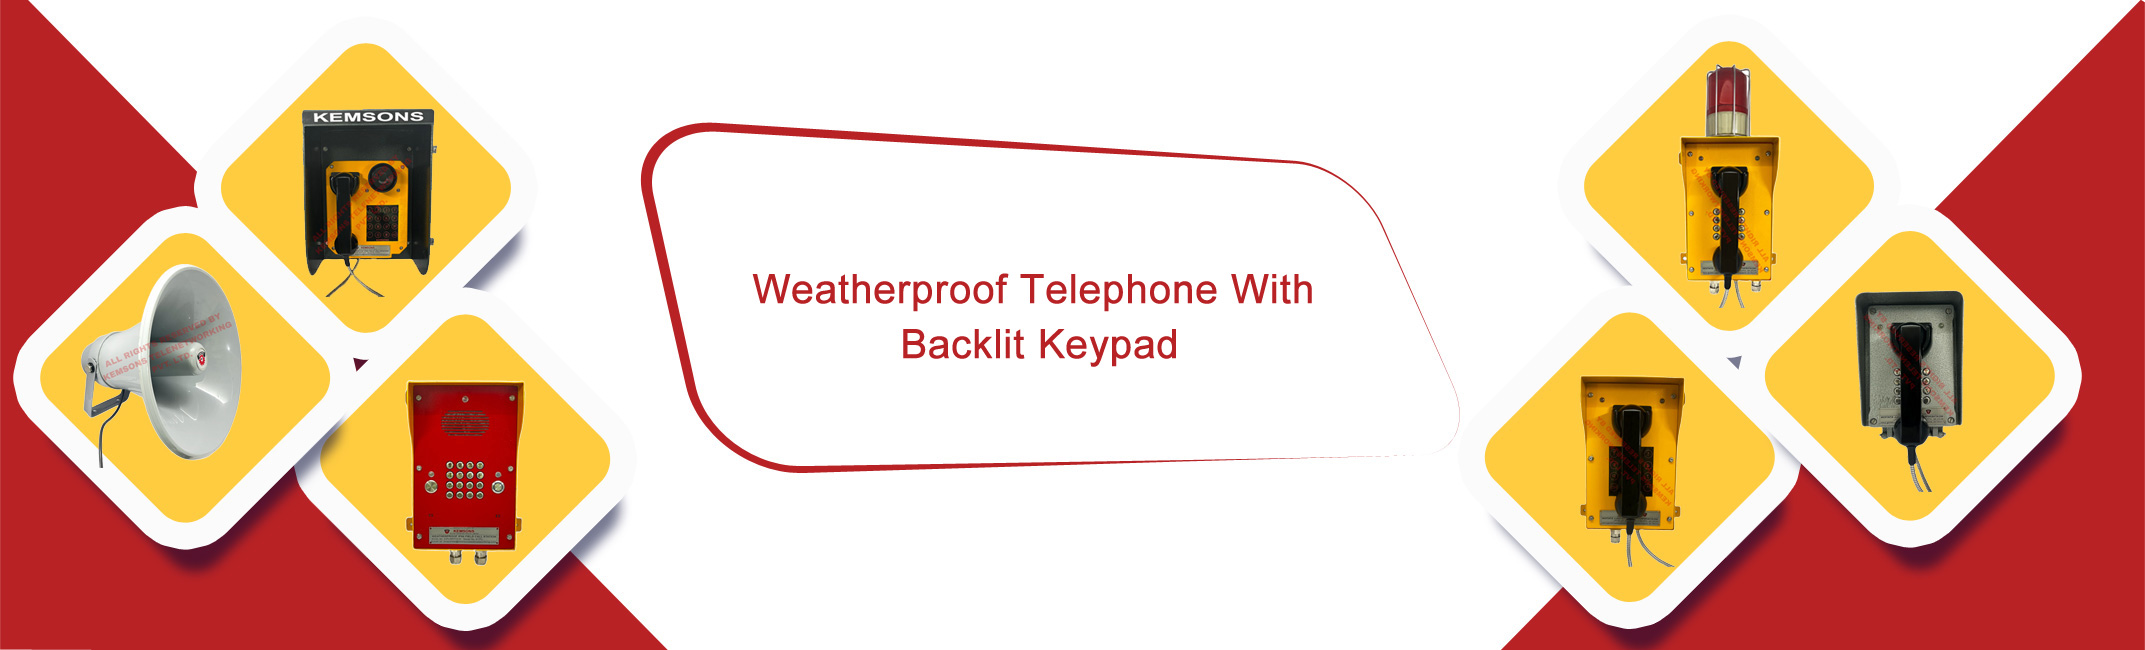 Weatherproof Telephone